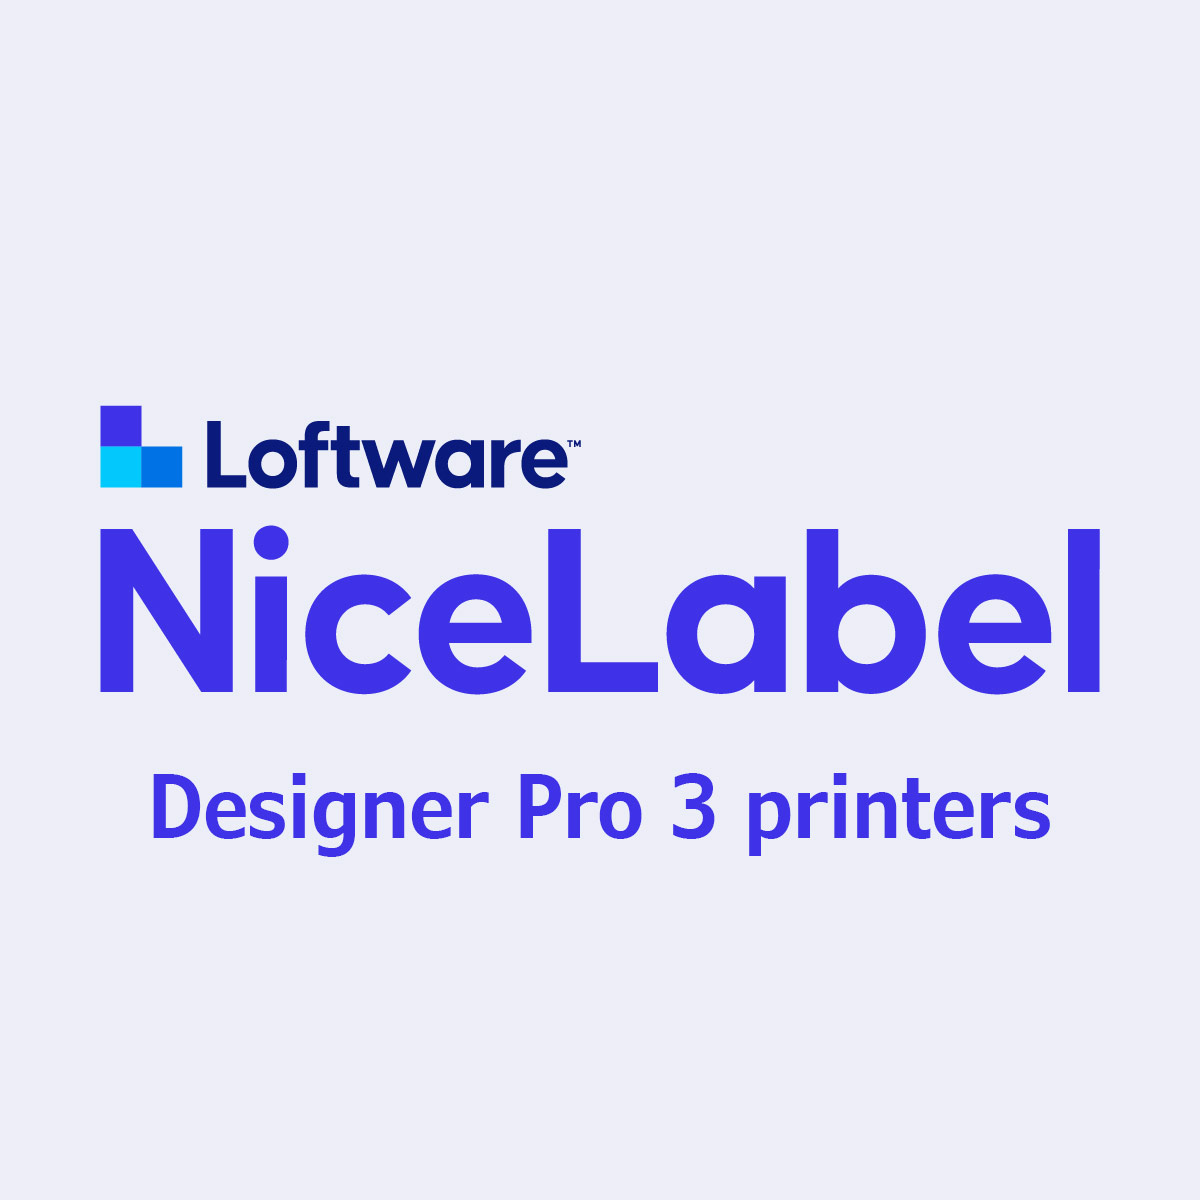 Nice Label Designer Pro 3 printers